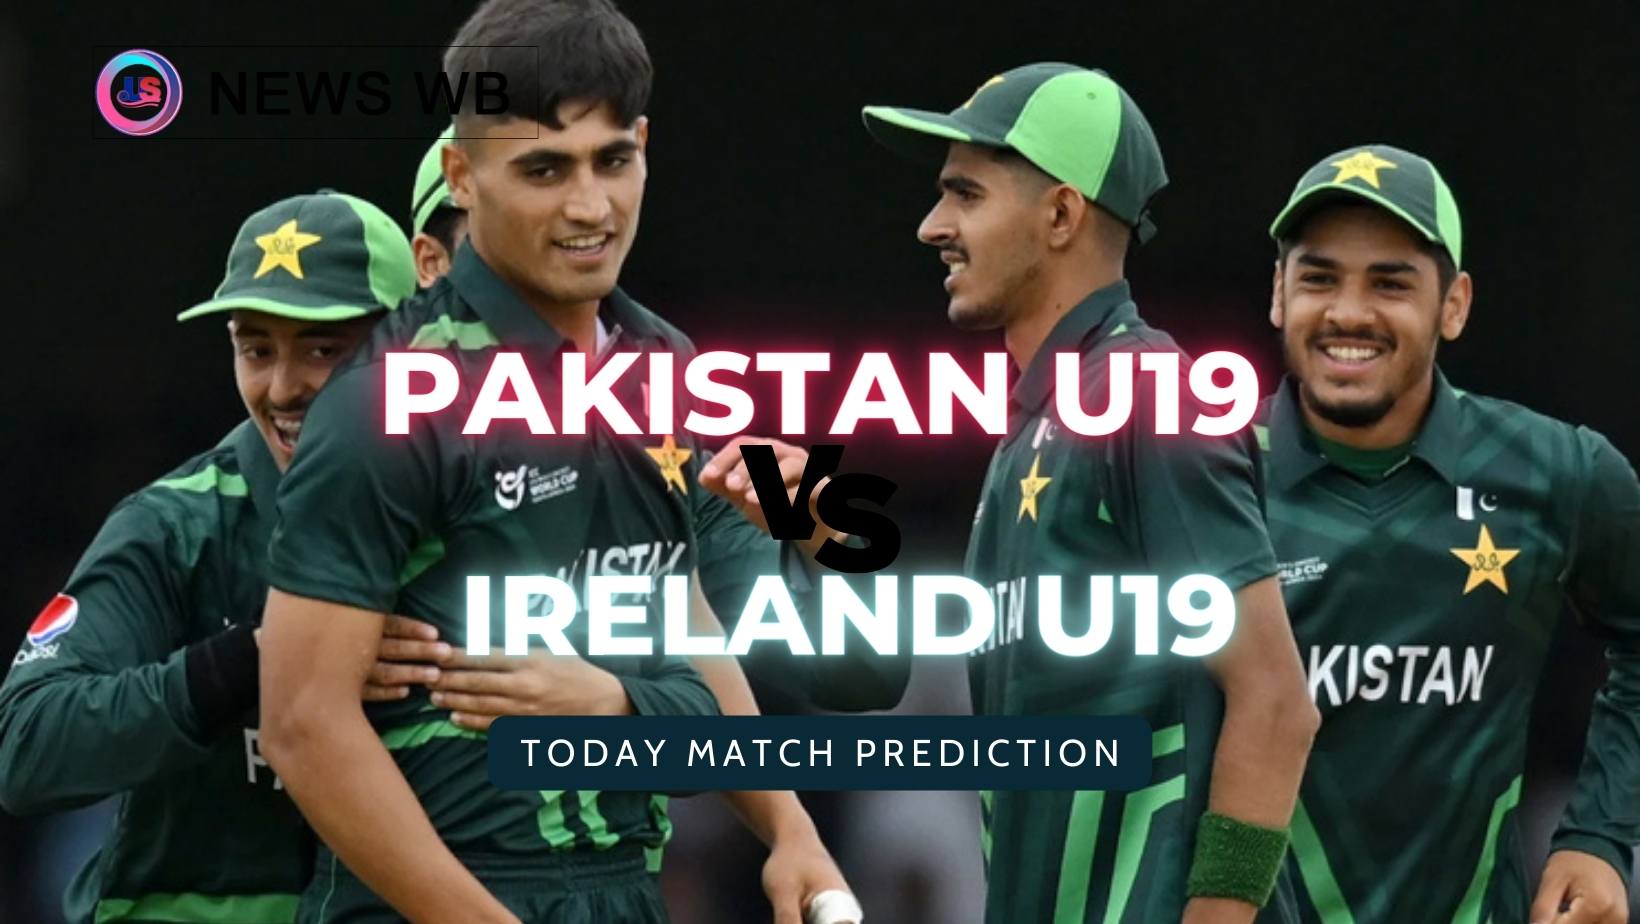 Today Match Prediction: PAK U19 vs IRE U19 Dream11 Team, Pakistan U19 vs Ireland U19 27th Match, Super Six, Group 1, Who Will Win?